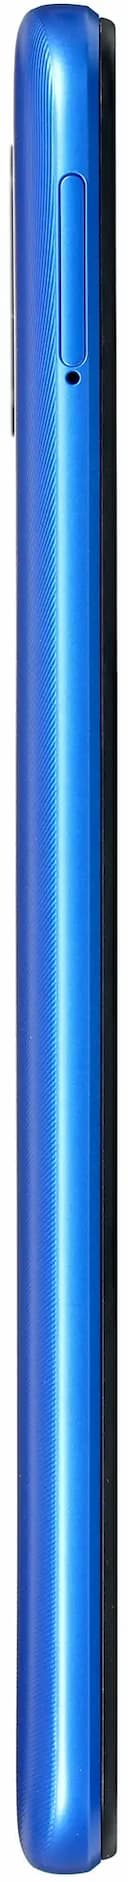 Смартфон Redmi 9A 6.53″ 2Gb, 32Gb, синий— фото №6